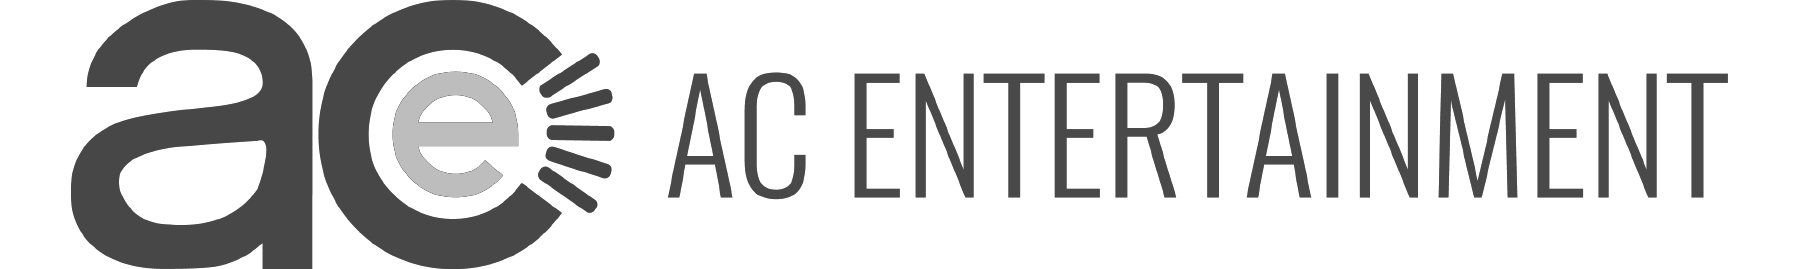 AC Entertainment logo.png